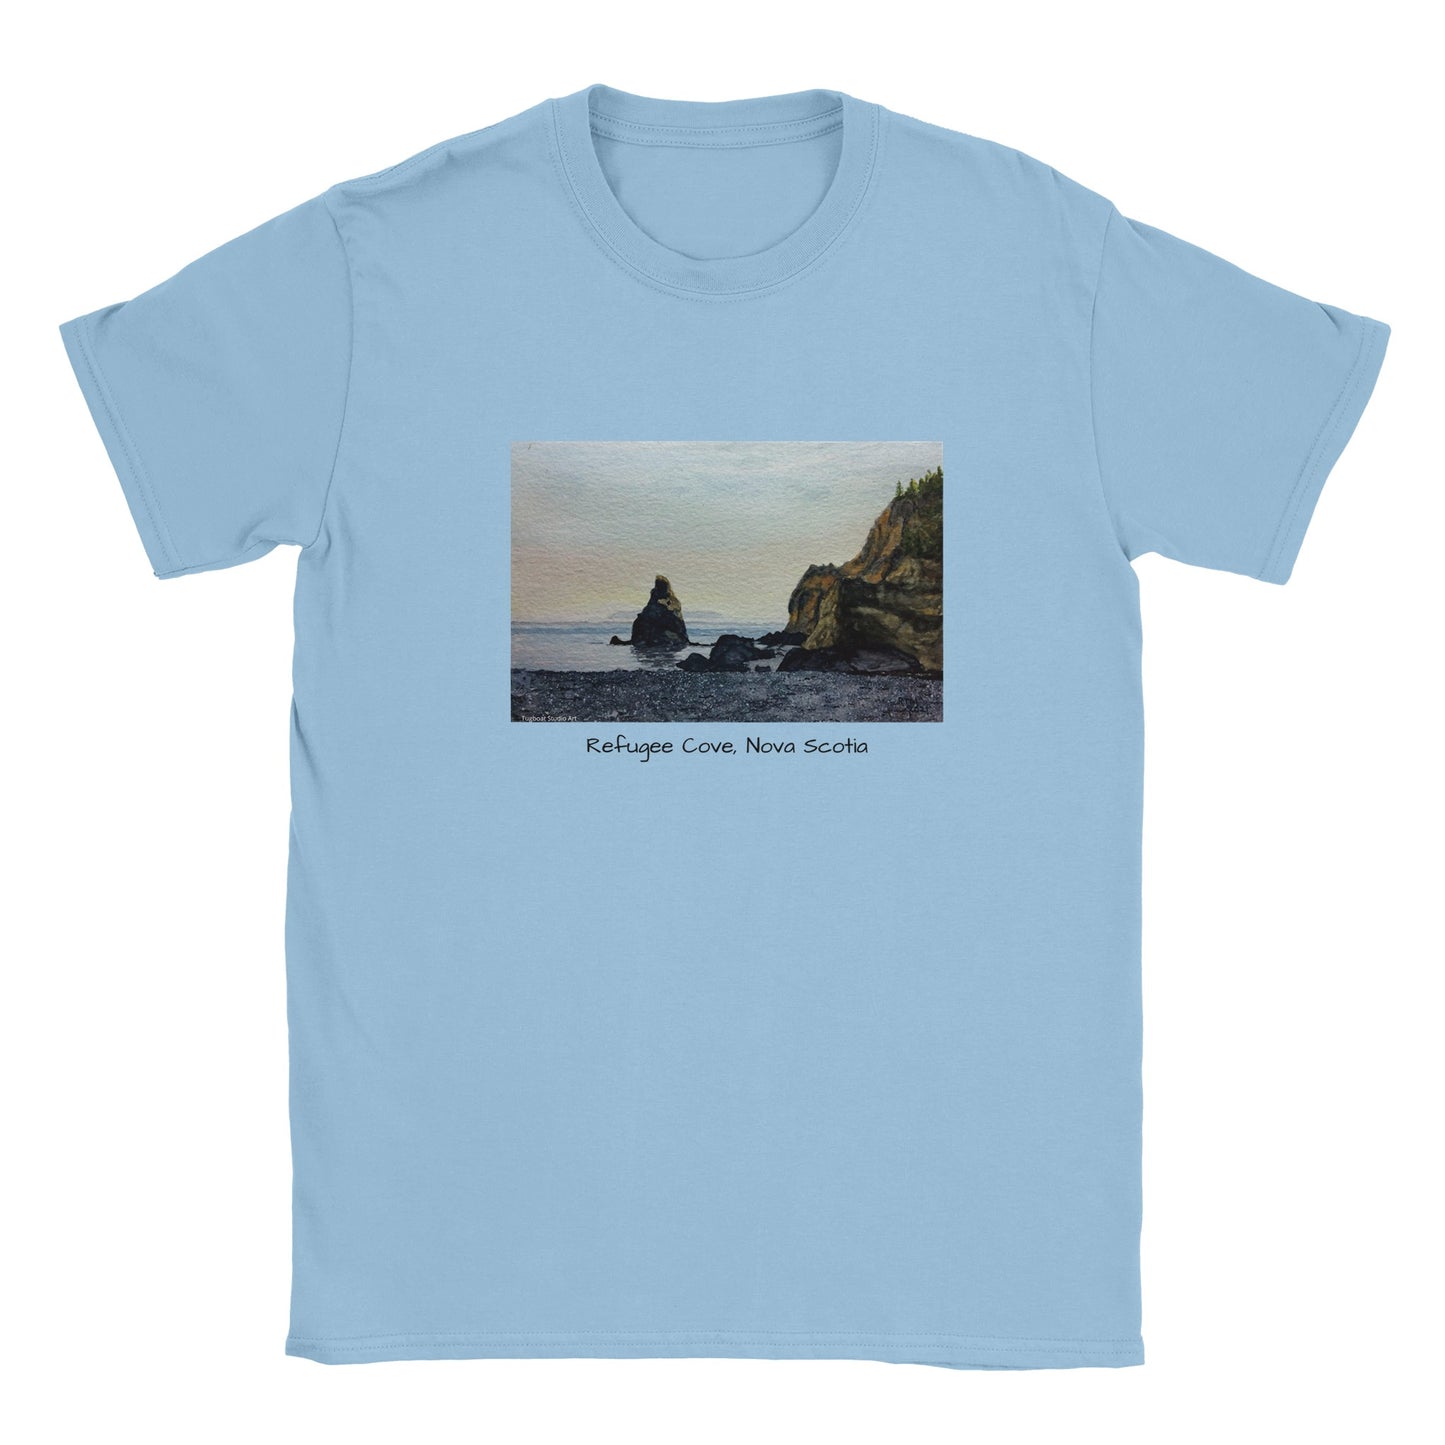 Refugee Cove T-shirt